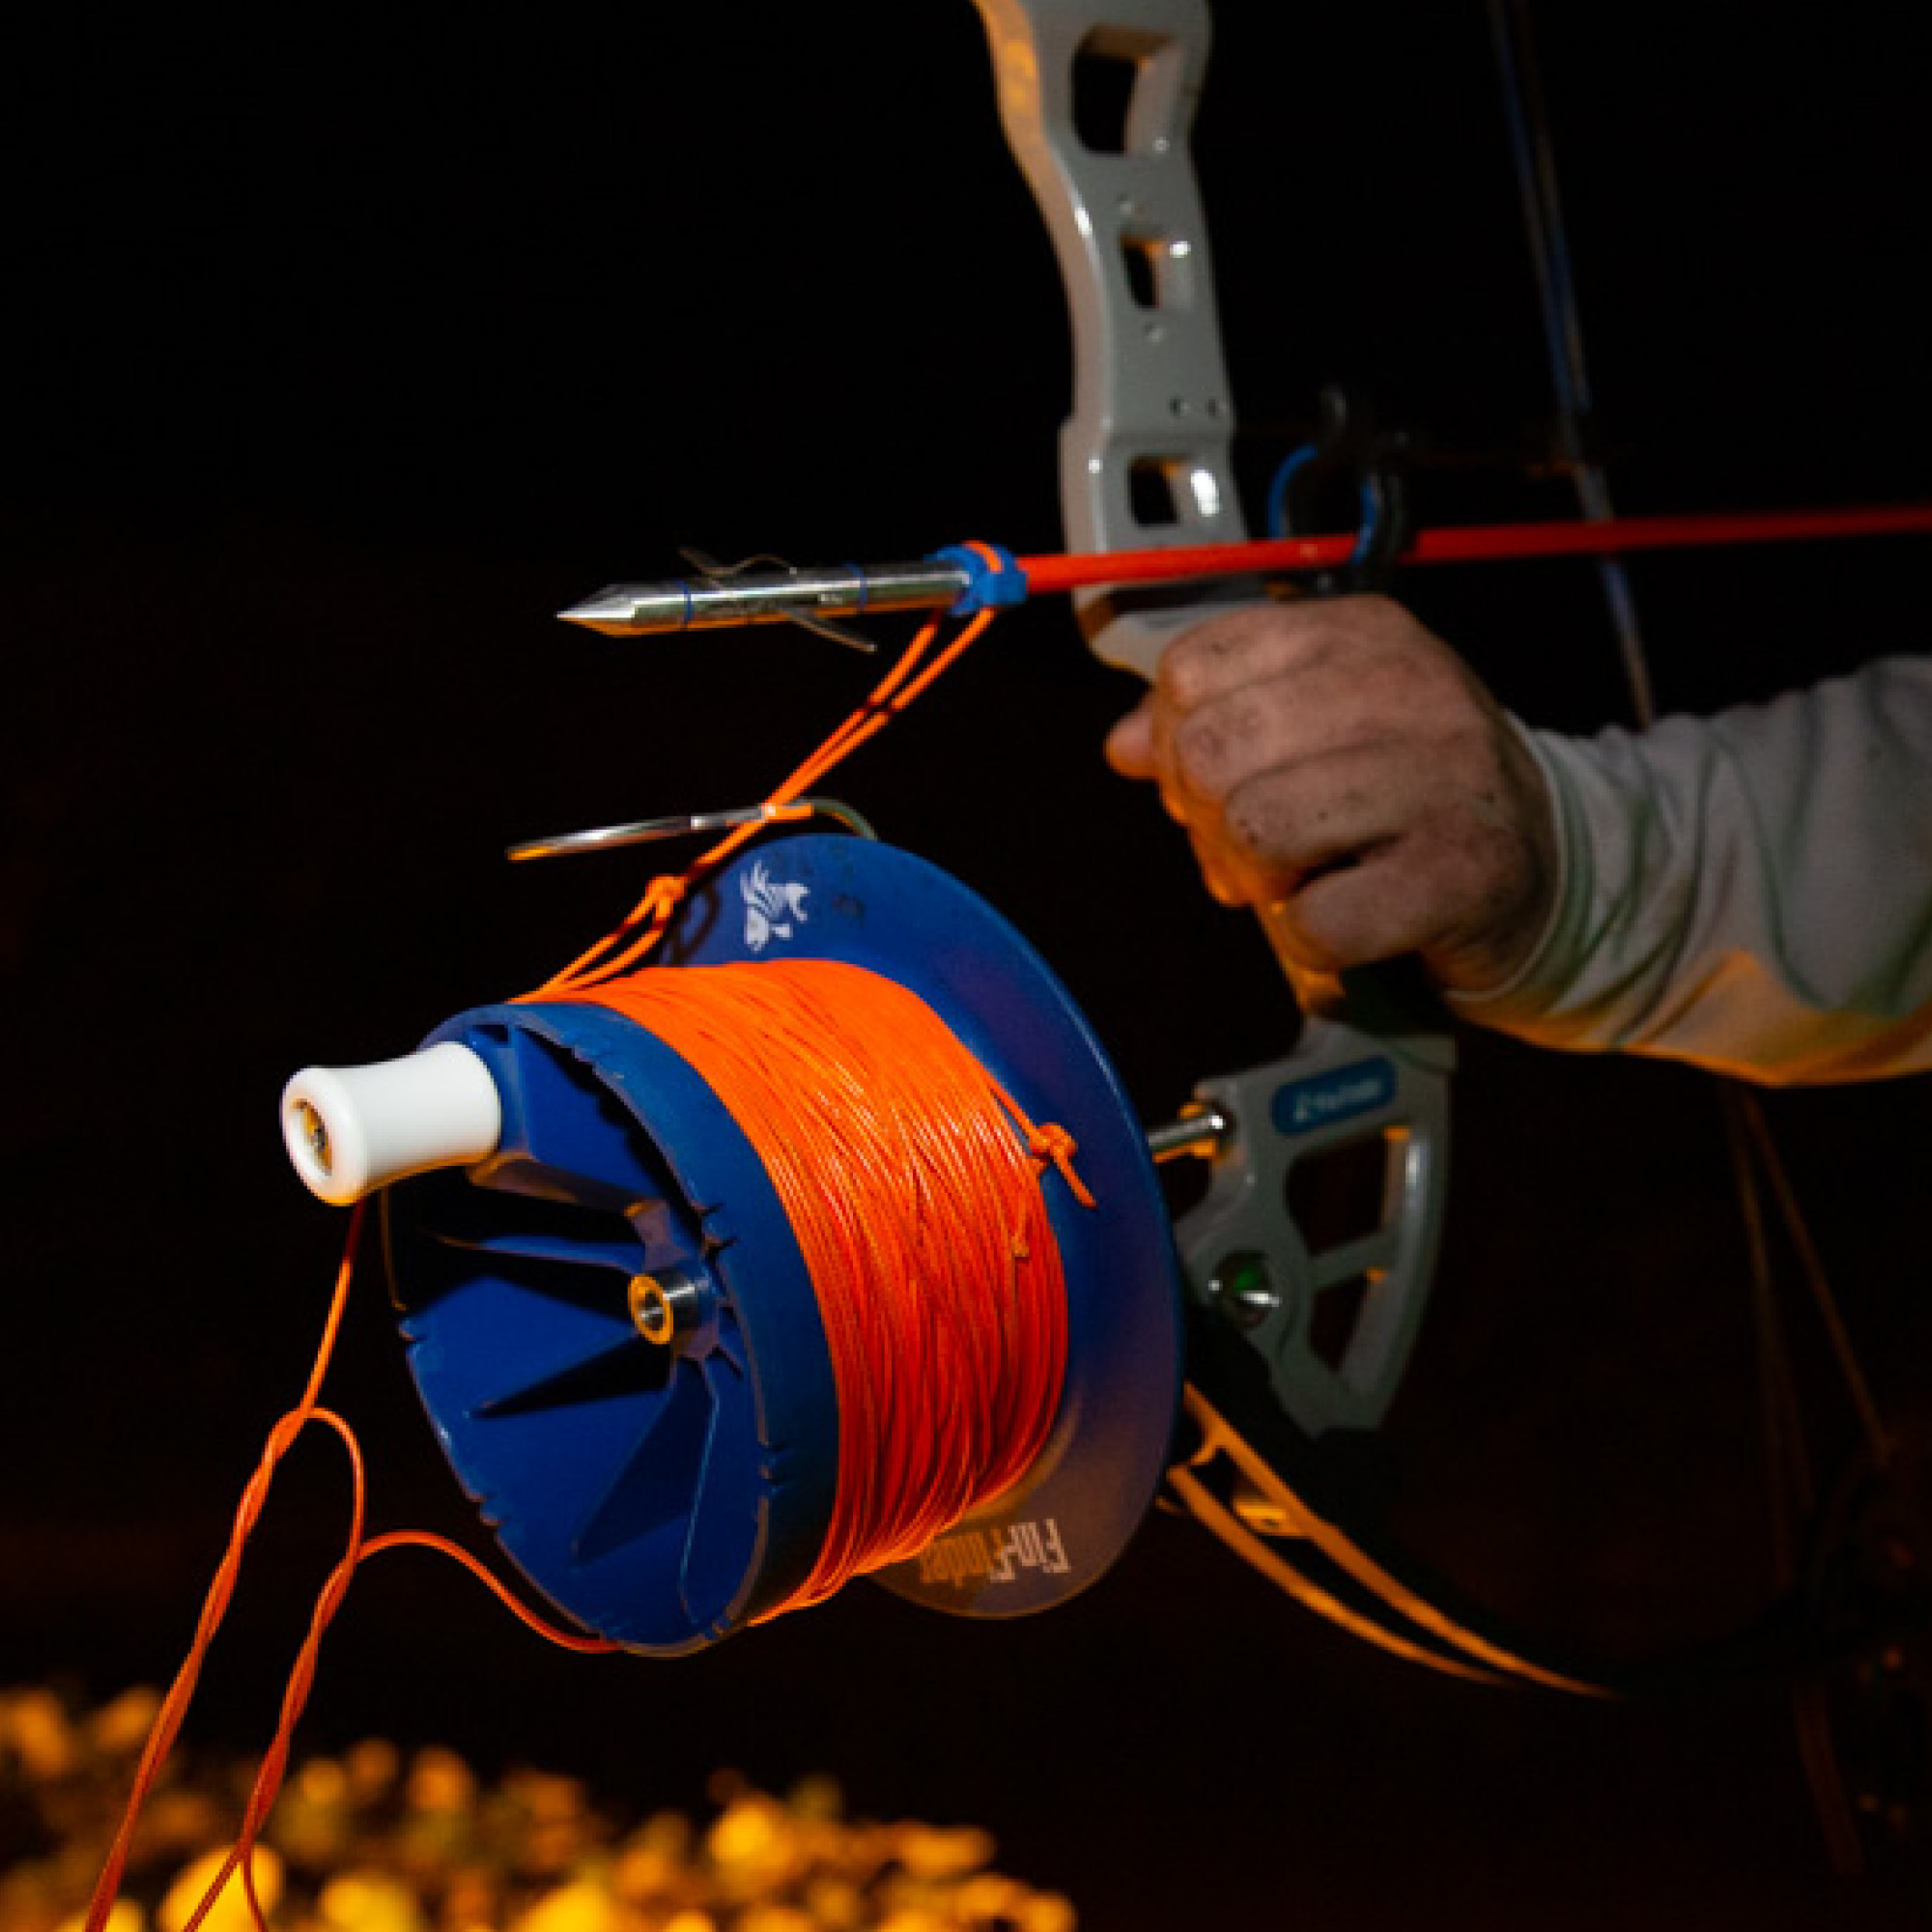 SideWinder Bowfishing Reel, Retrieval System